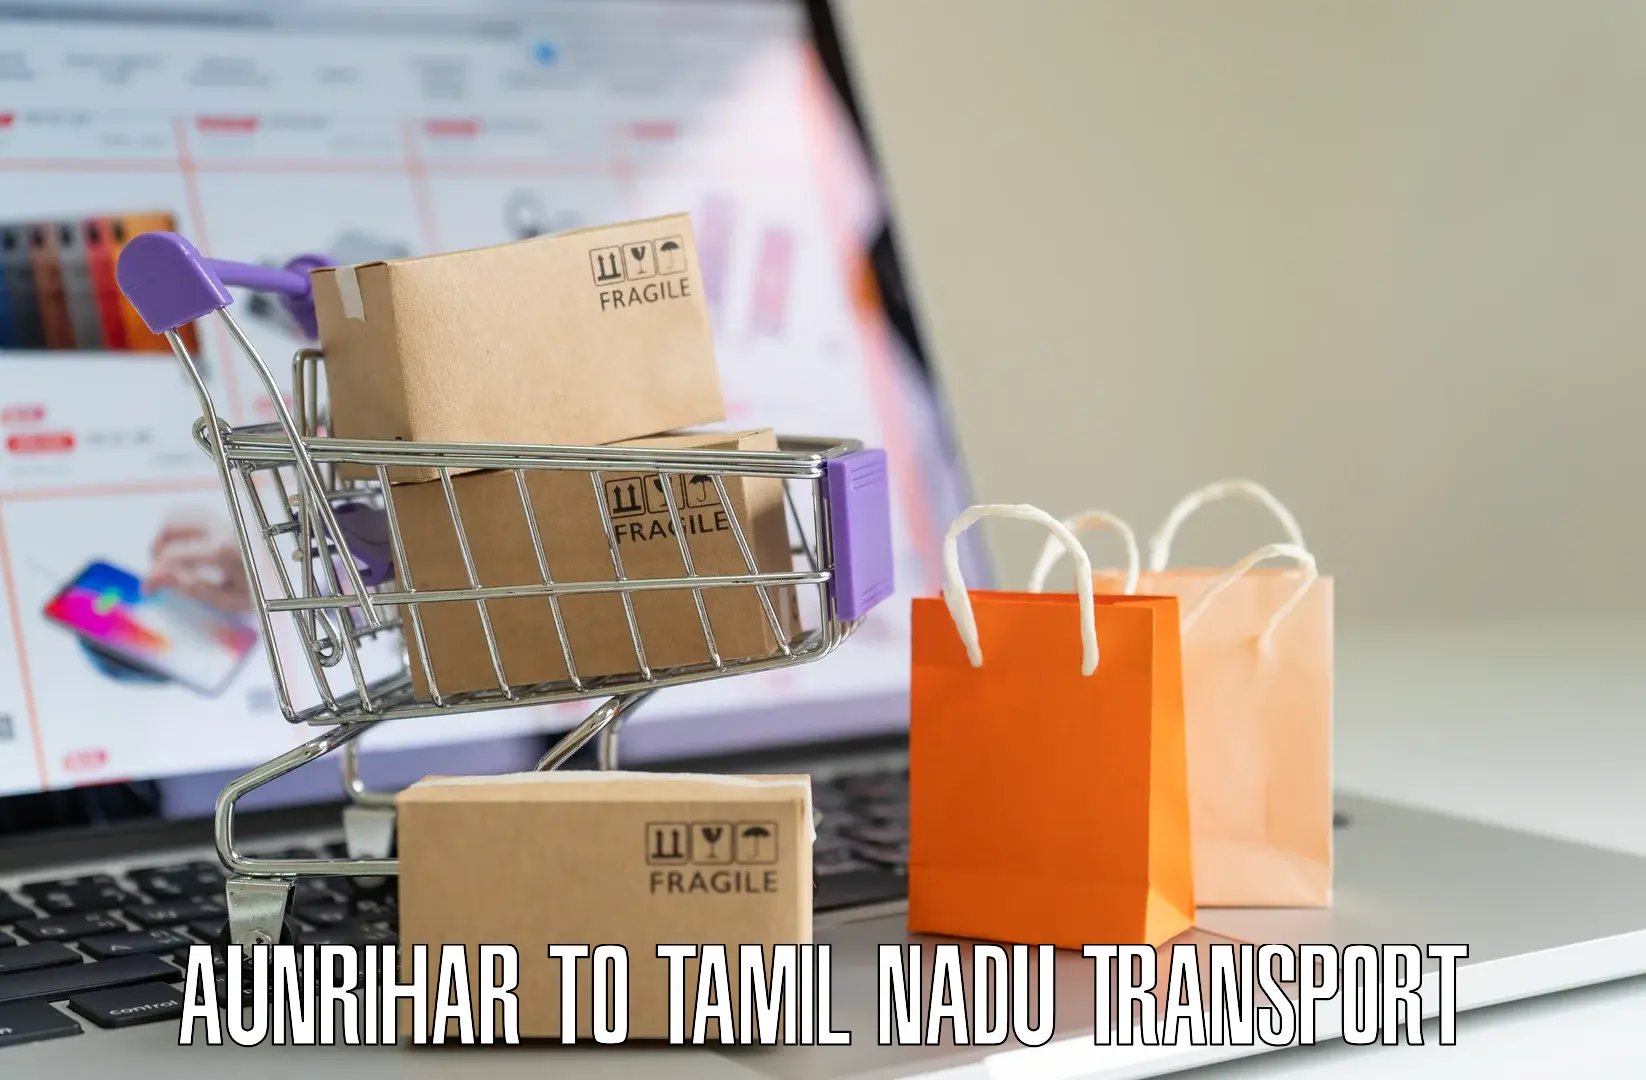 Pick up transport service Aunrihar to Mettupalayam